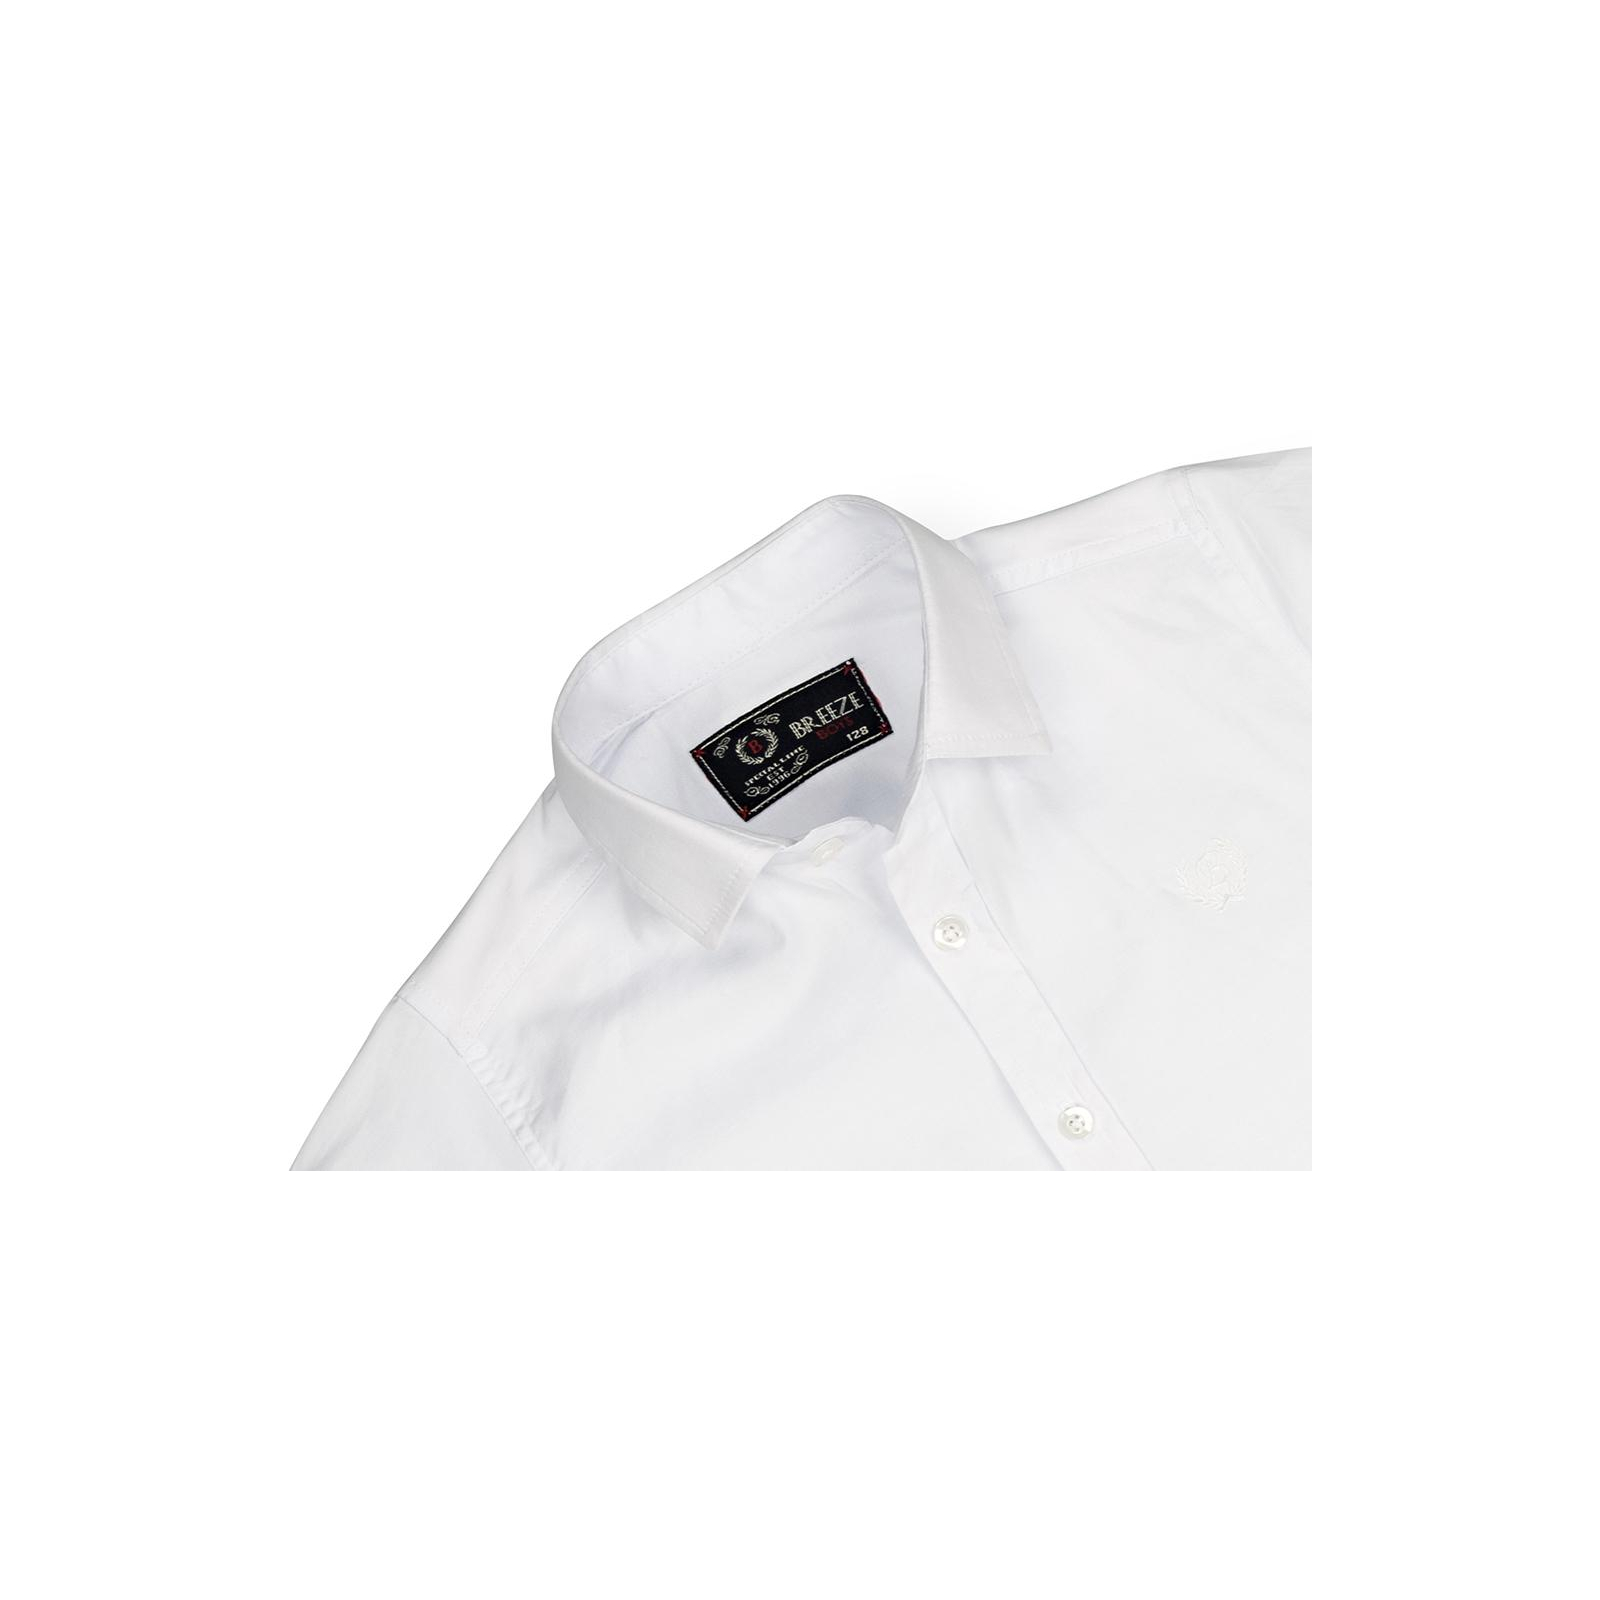 Рубашка Breeze для школы (G-285-164B-white) изображение 4